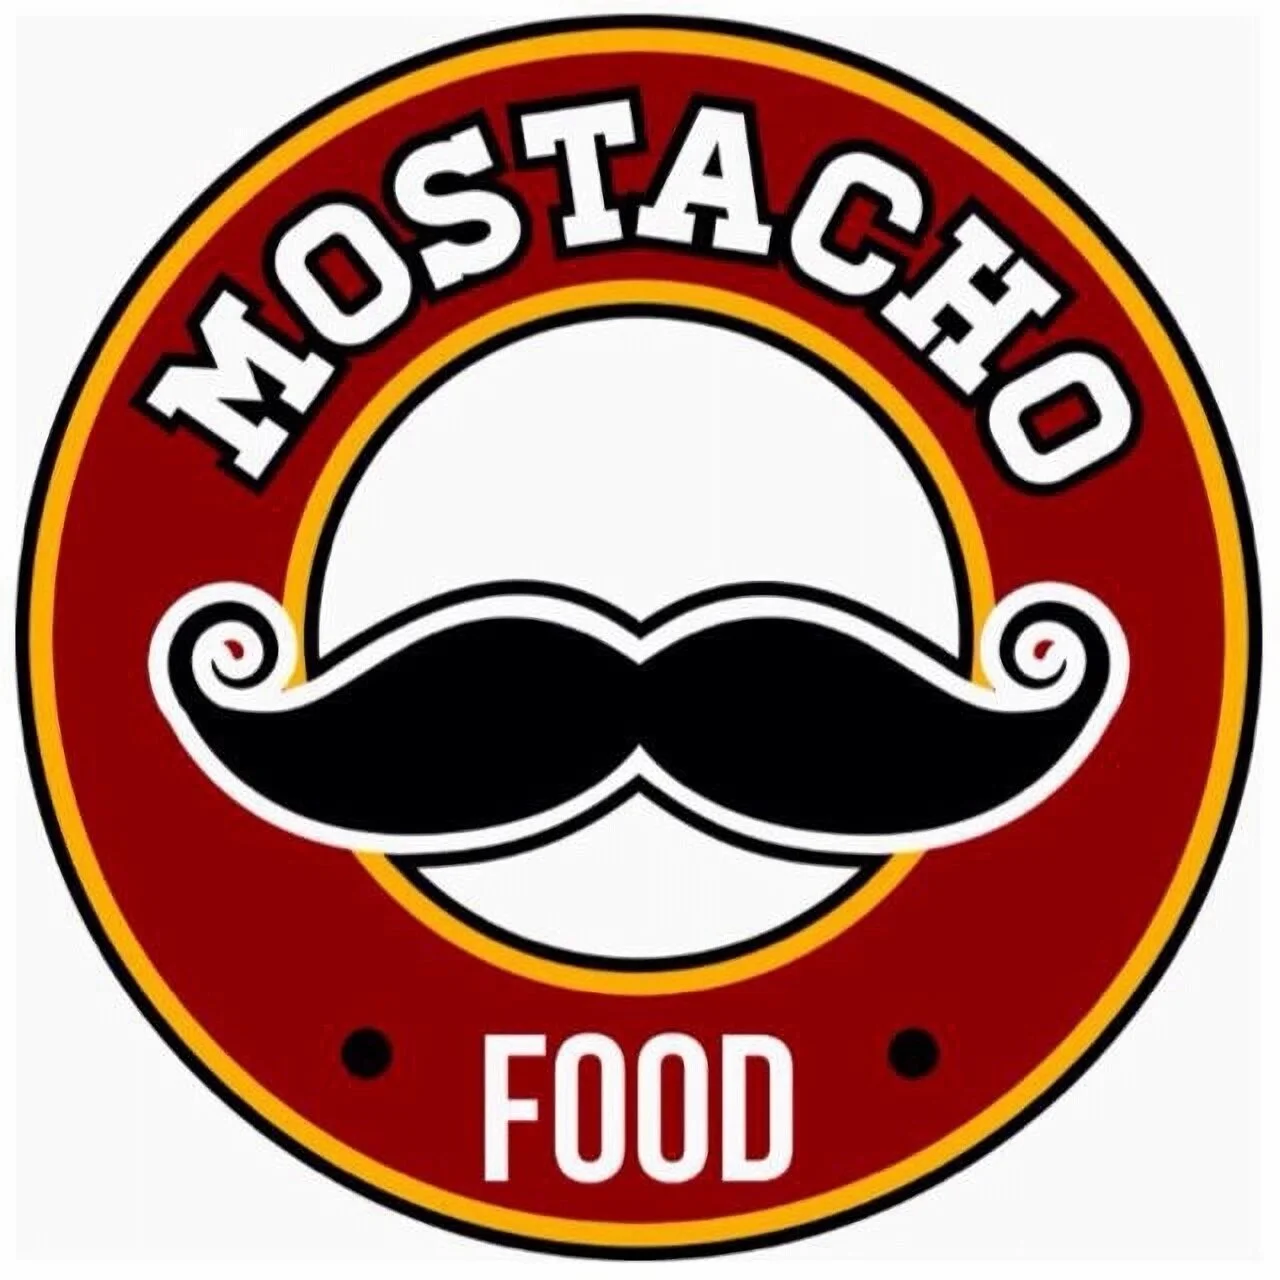 Mostacho Food-7788